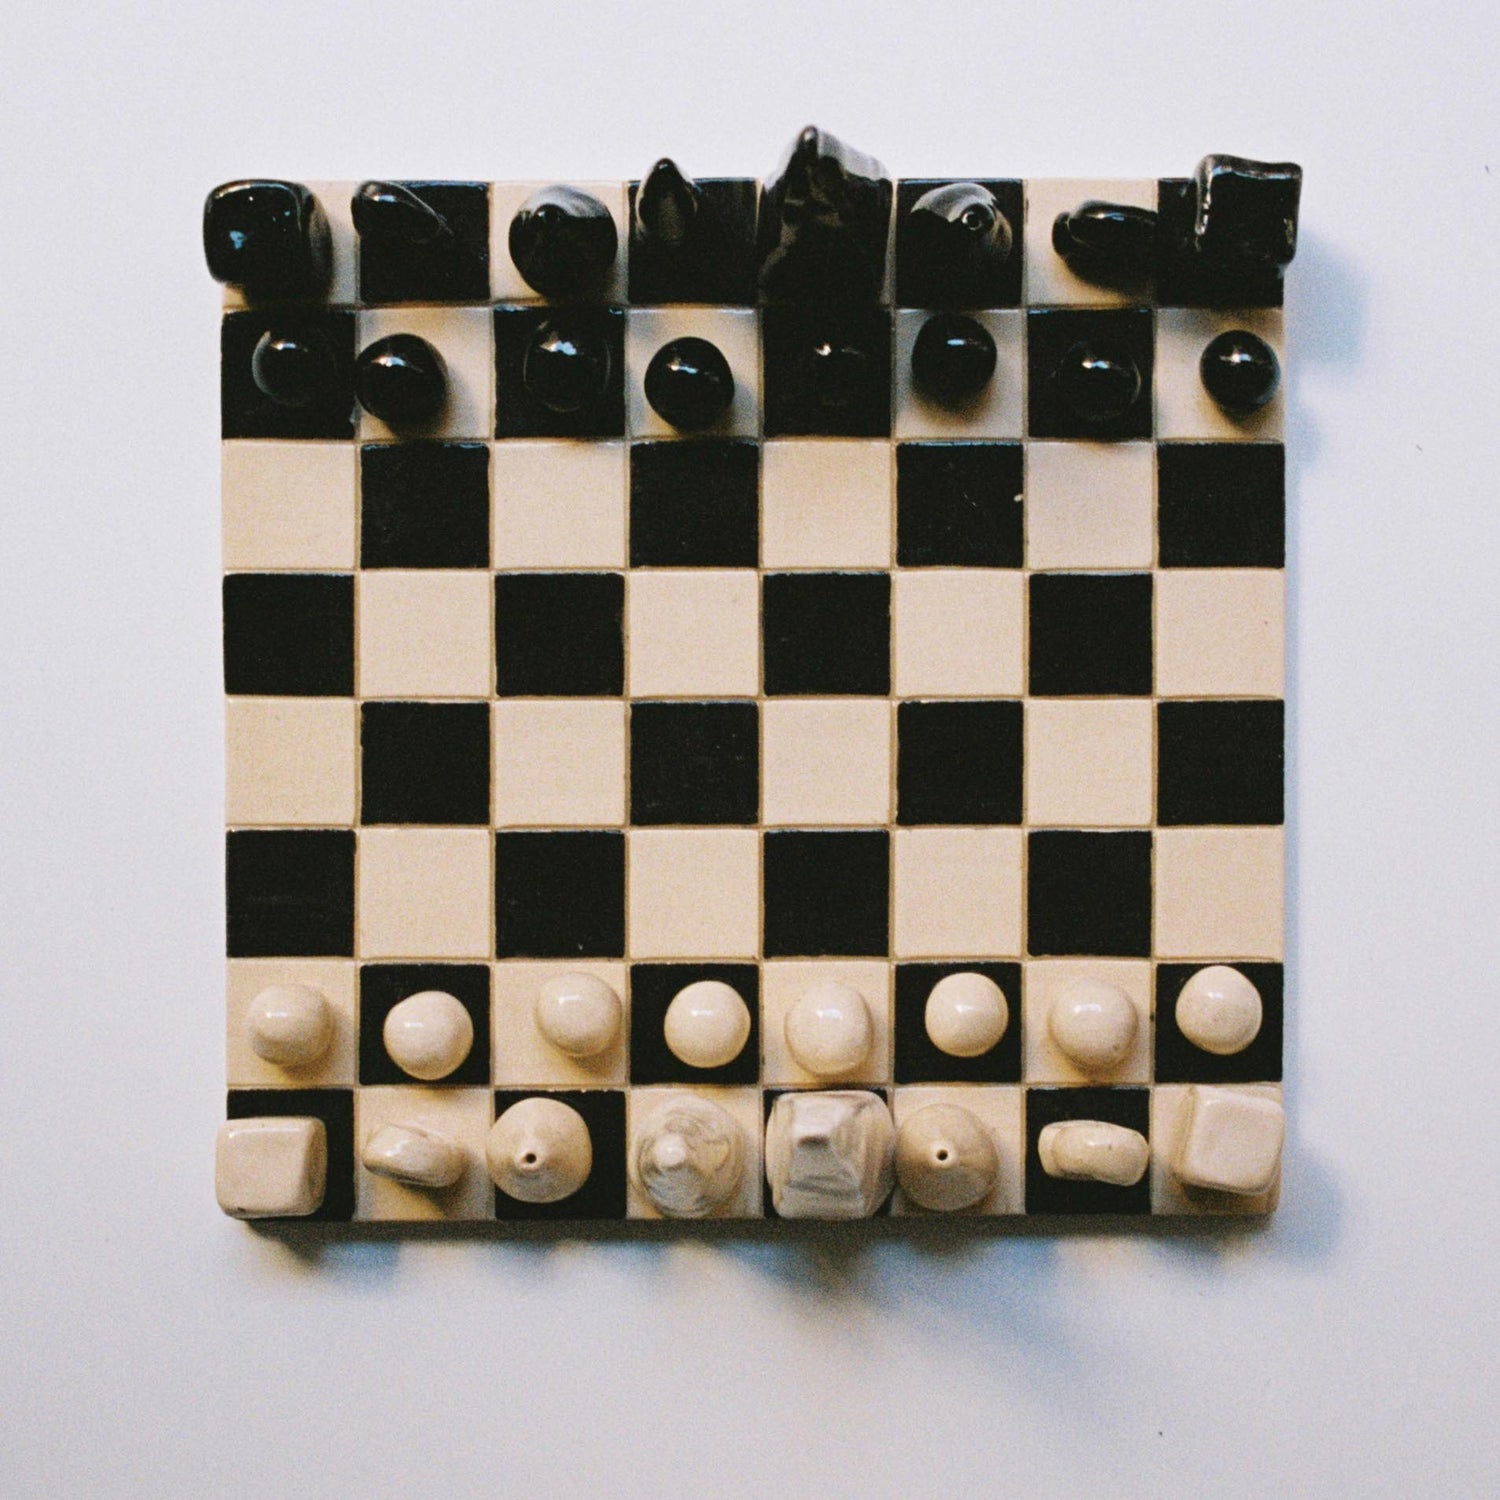 The chess capsule